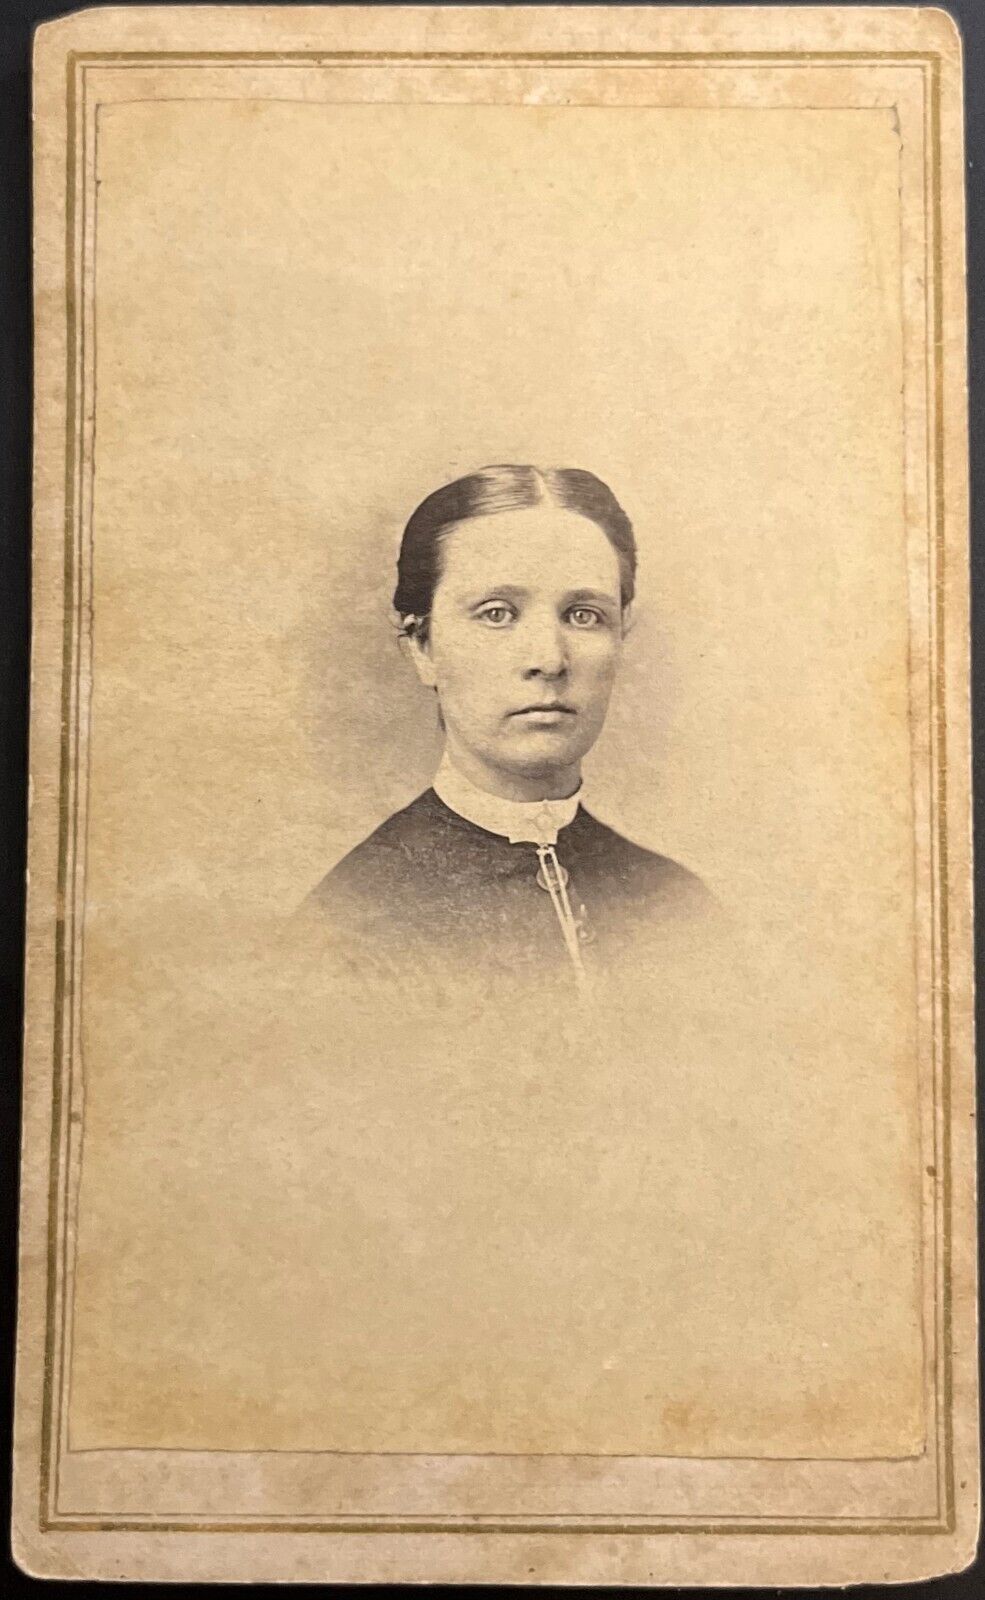 1862-1863 CDV PHOTO CIVIL WAR ERA YOUNG WOMAN; TW Cridland Photograph, Dayton OH